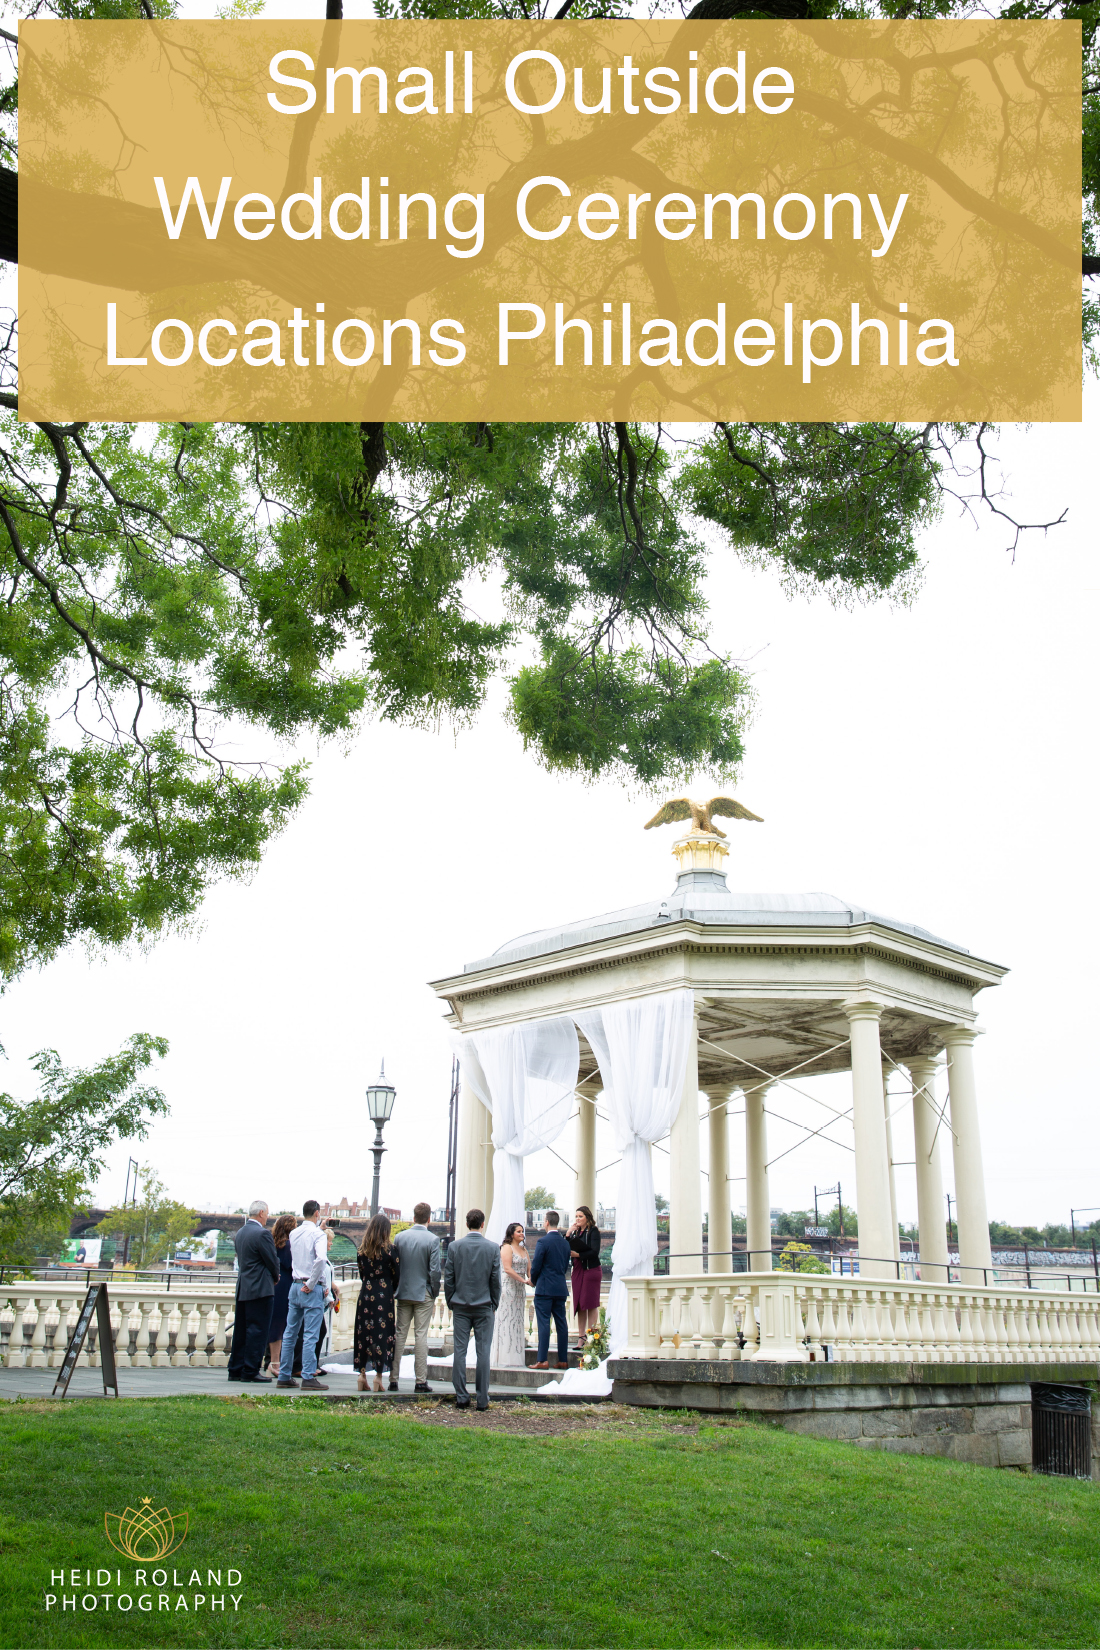 Small outside wedding ceremony locations in Philadelphia